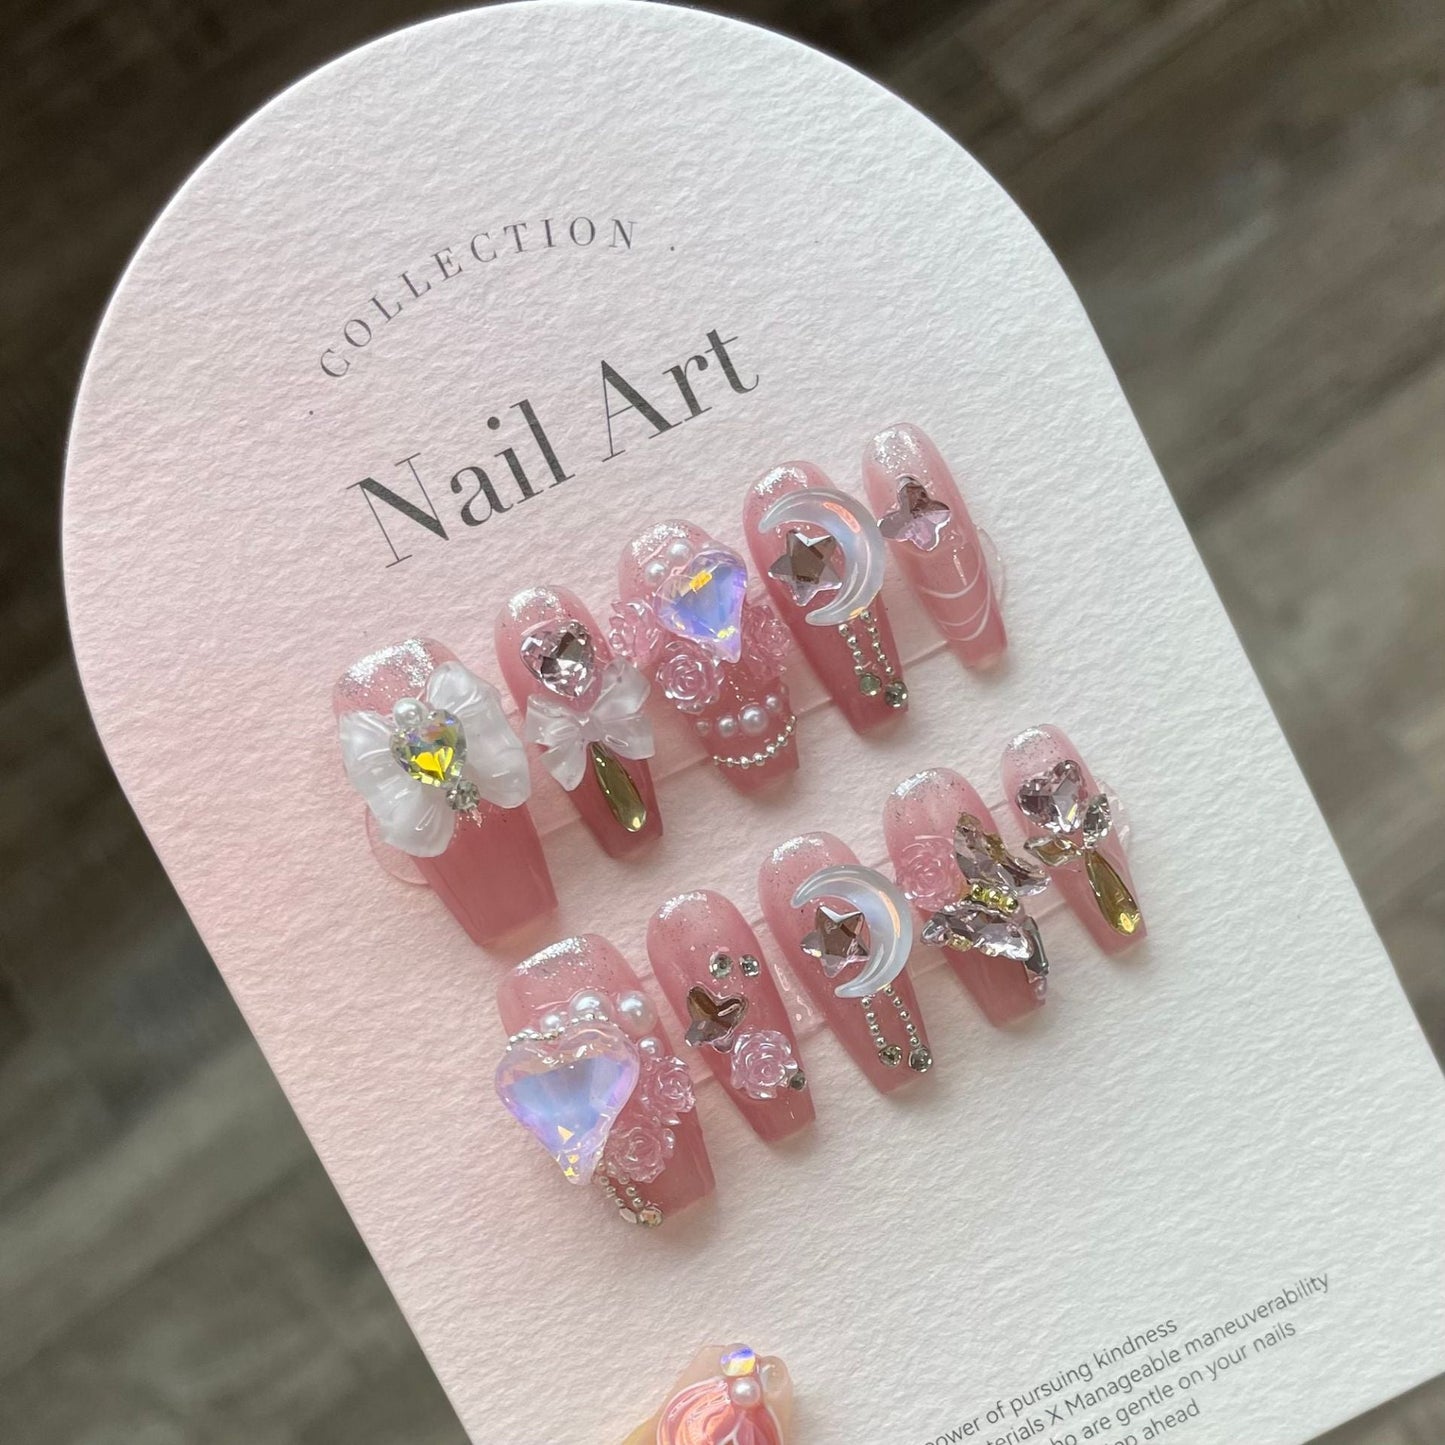 899 fairy style press on nails 100% handmade false nails pink